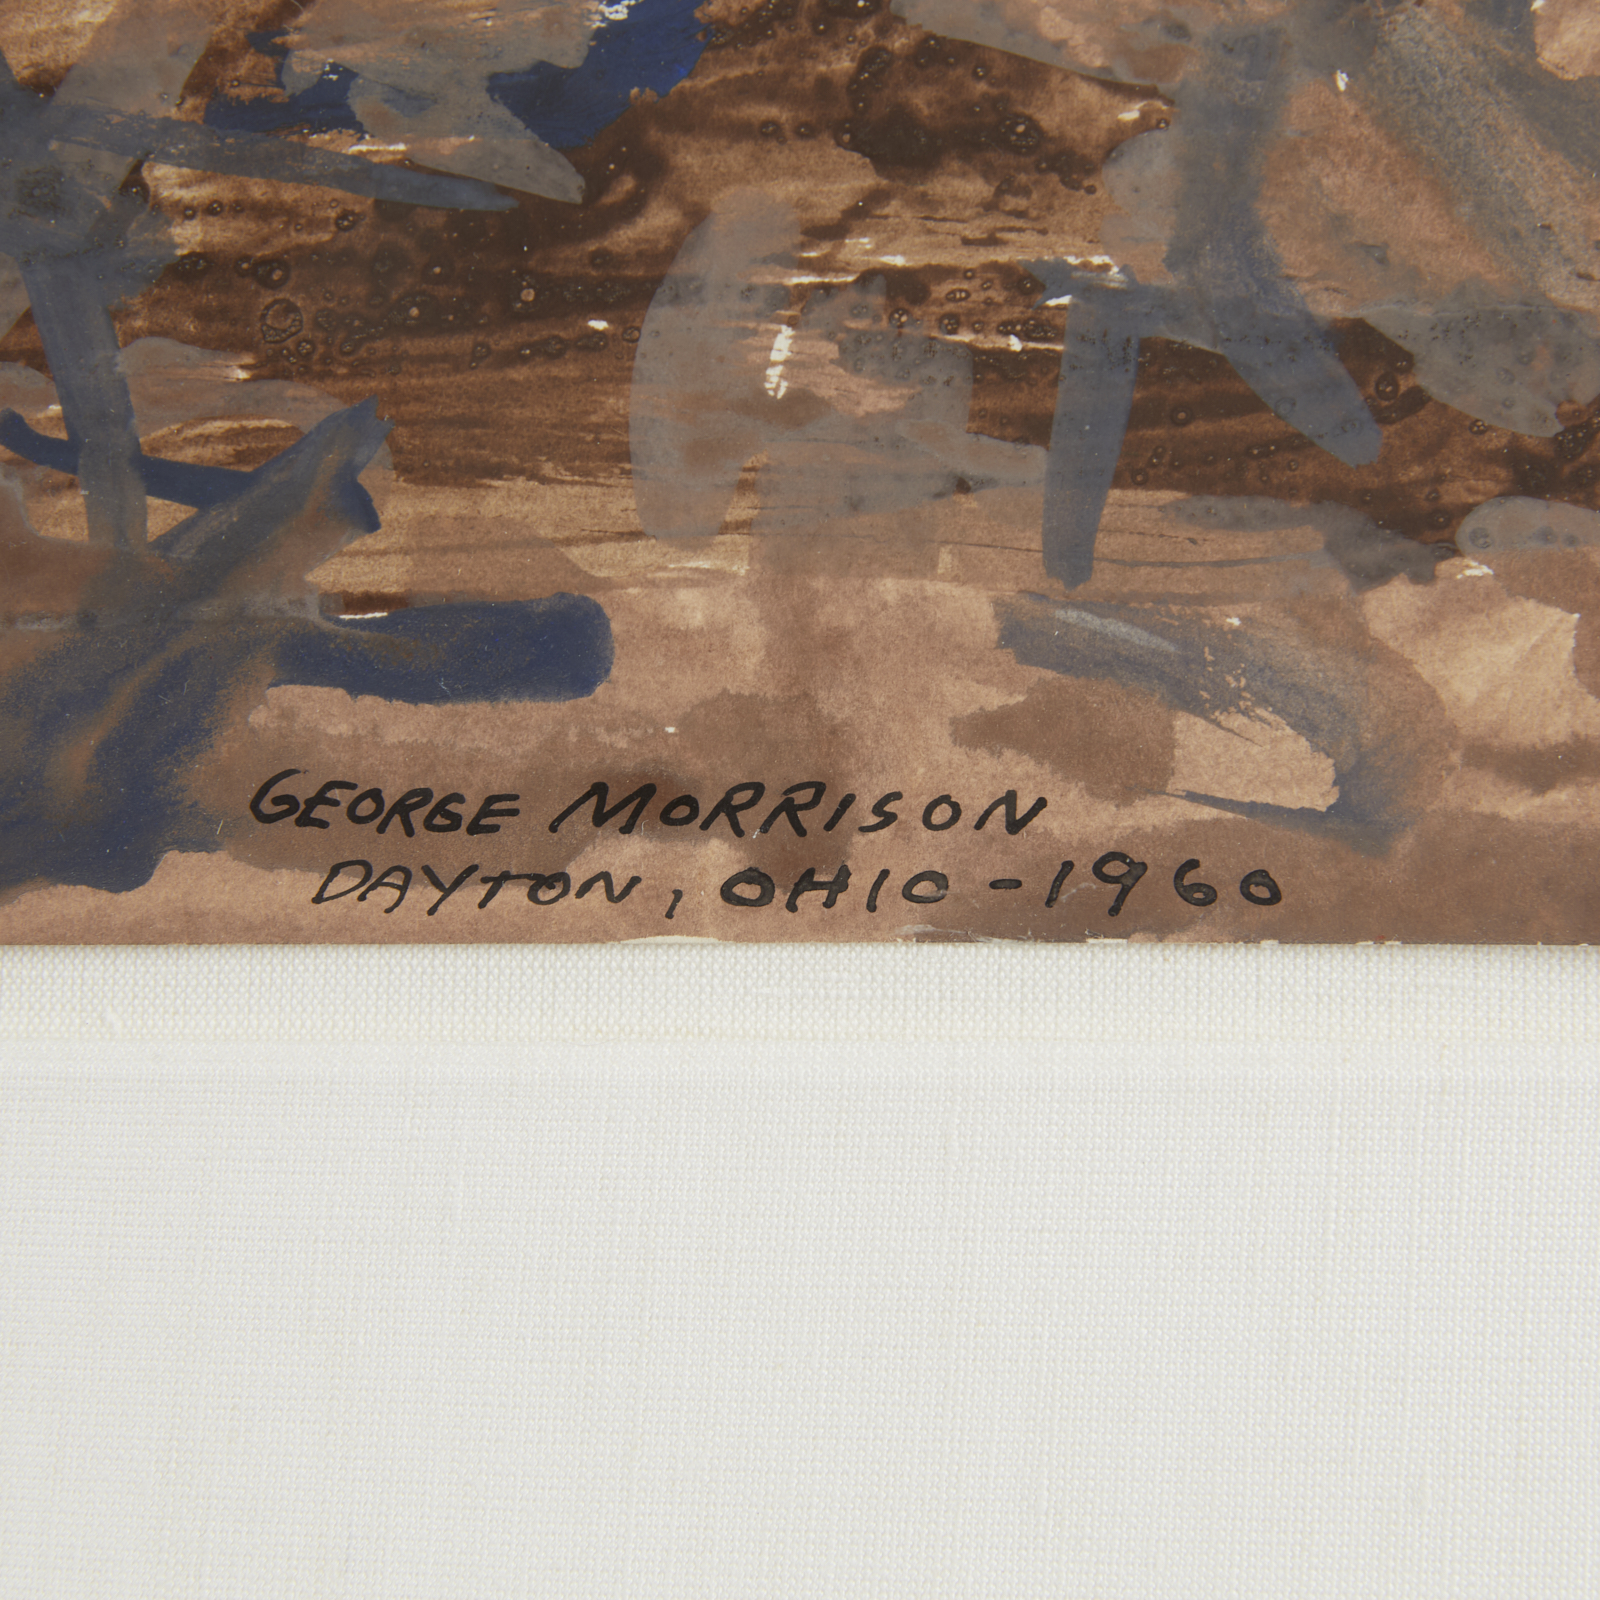 George Morrison "Nostalgia Aft. deChirco" Painting - Image 2 of 7